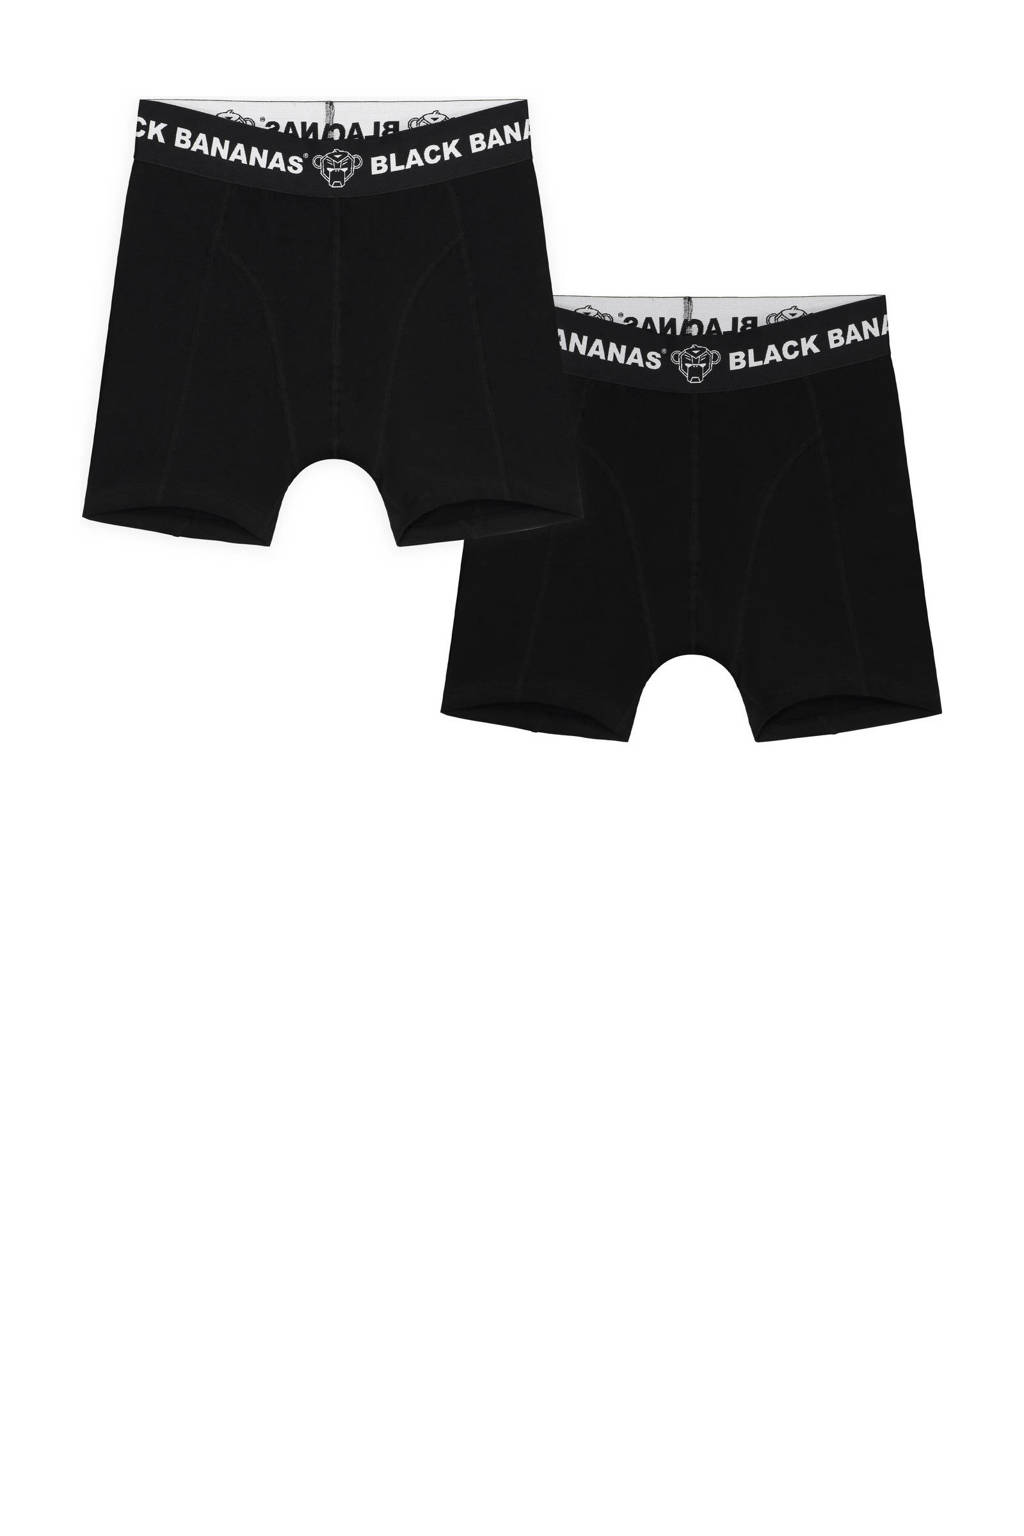 BLACK BANANAS   boxershort - set van 2 zwart, Zwart